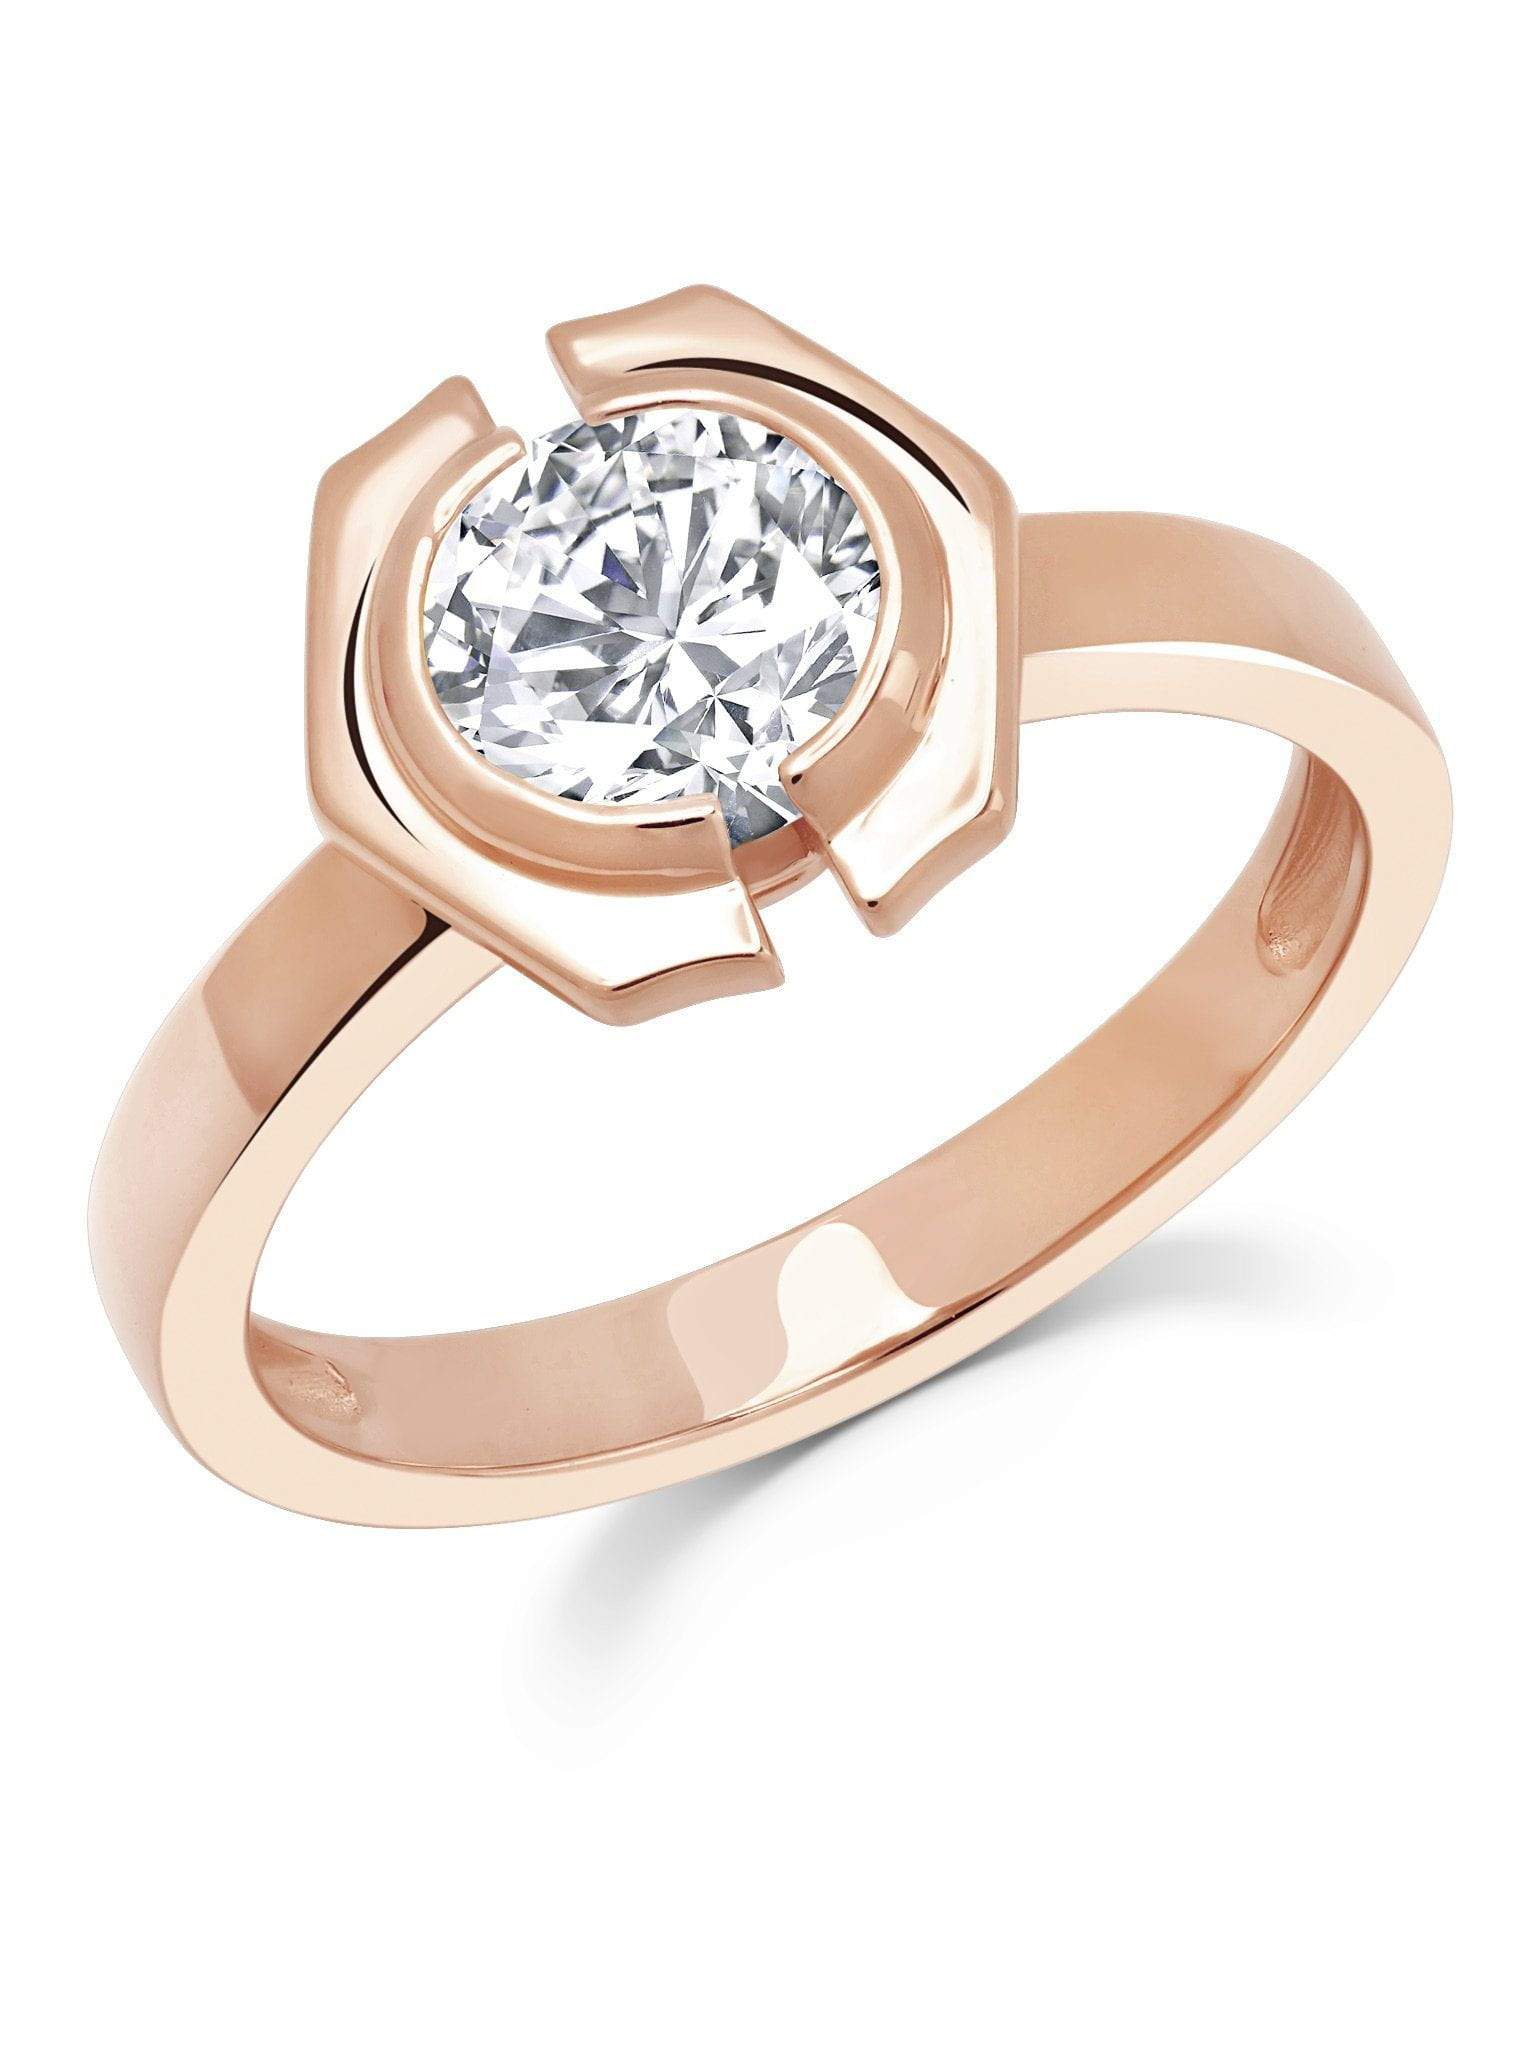 Crislu Jewelry Crislu Solara Ring finished in 18kt Rose Gold Size 7